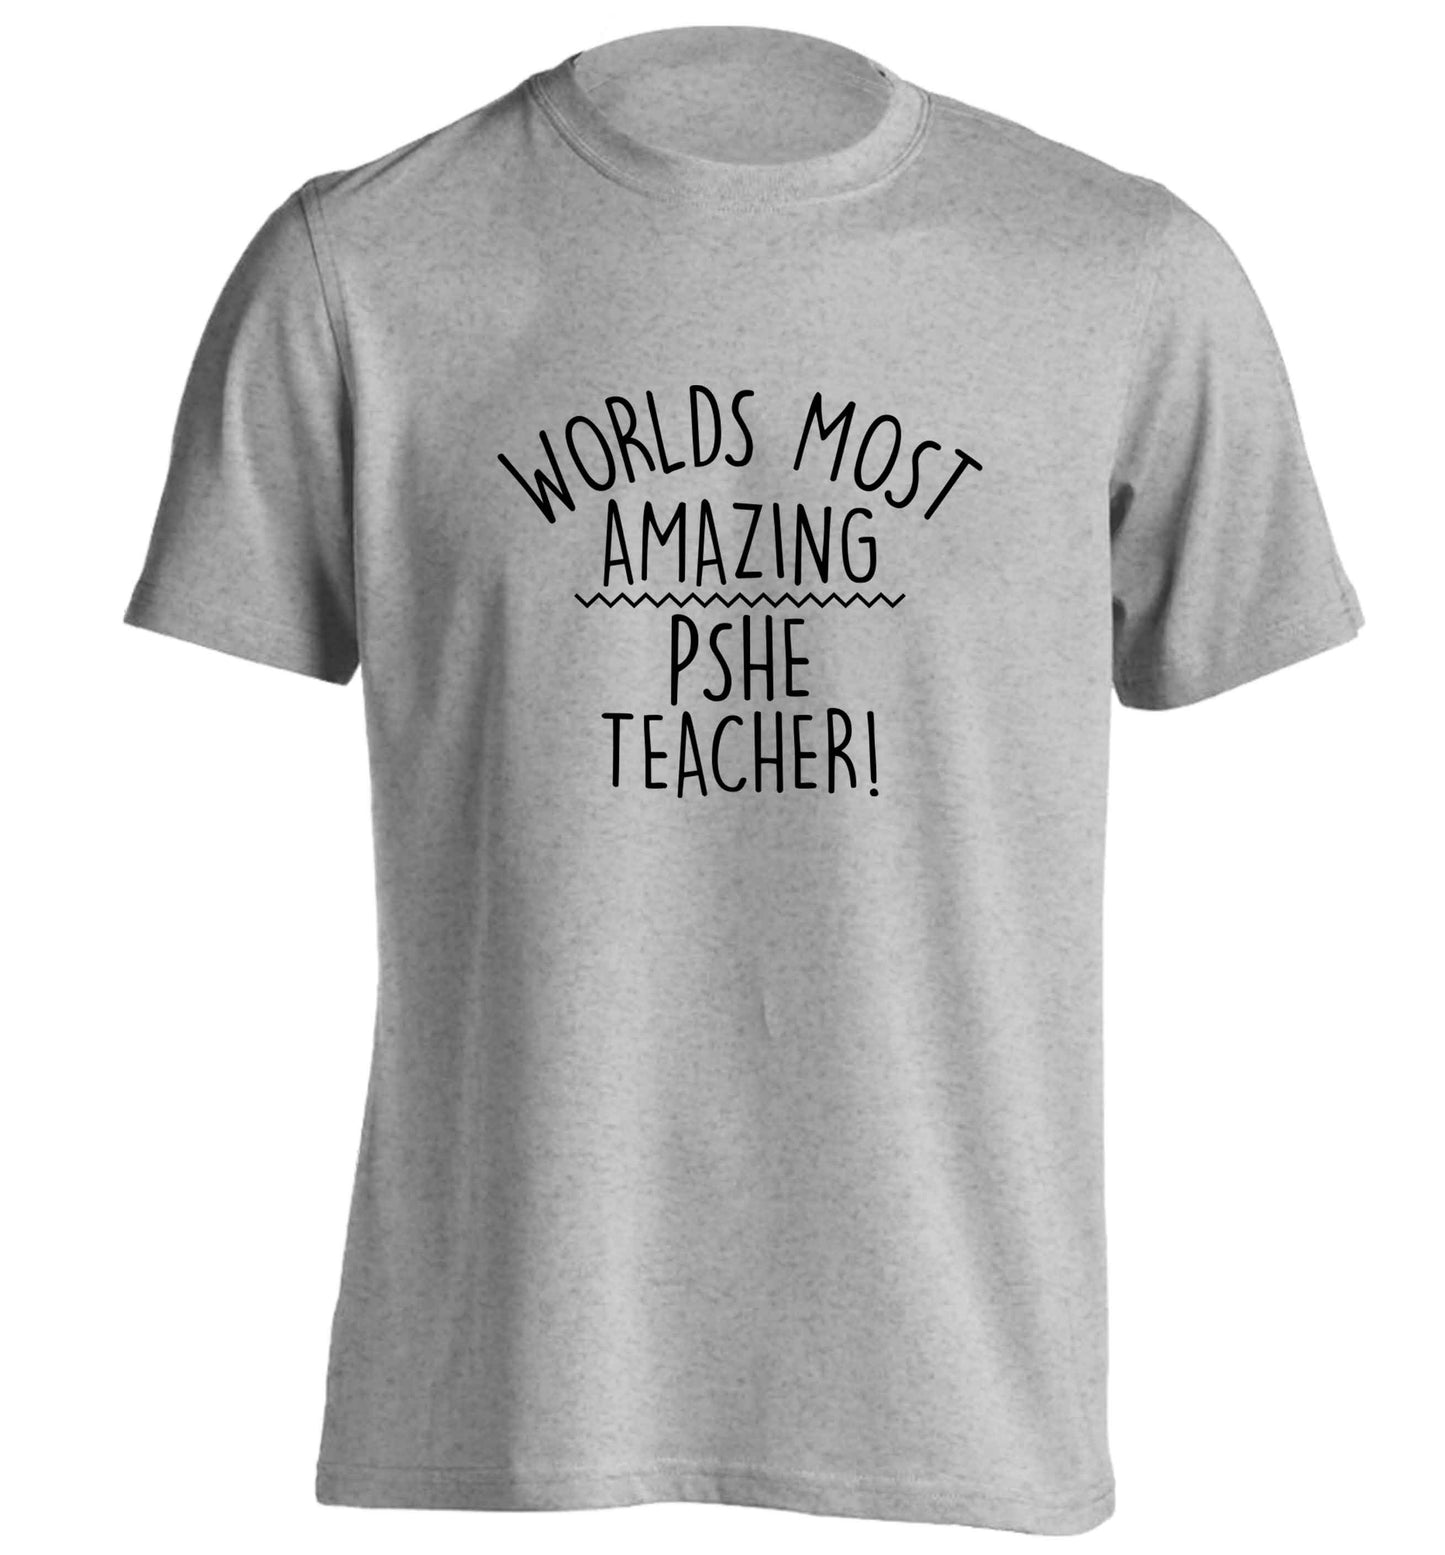 Worlds most amazing PHSE teacher adults unisex grey Tshirt 2XL